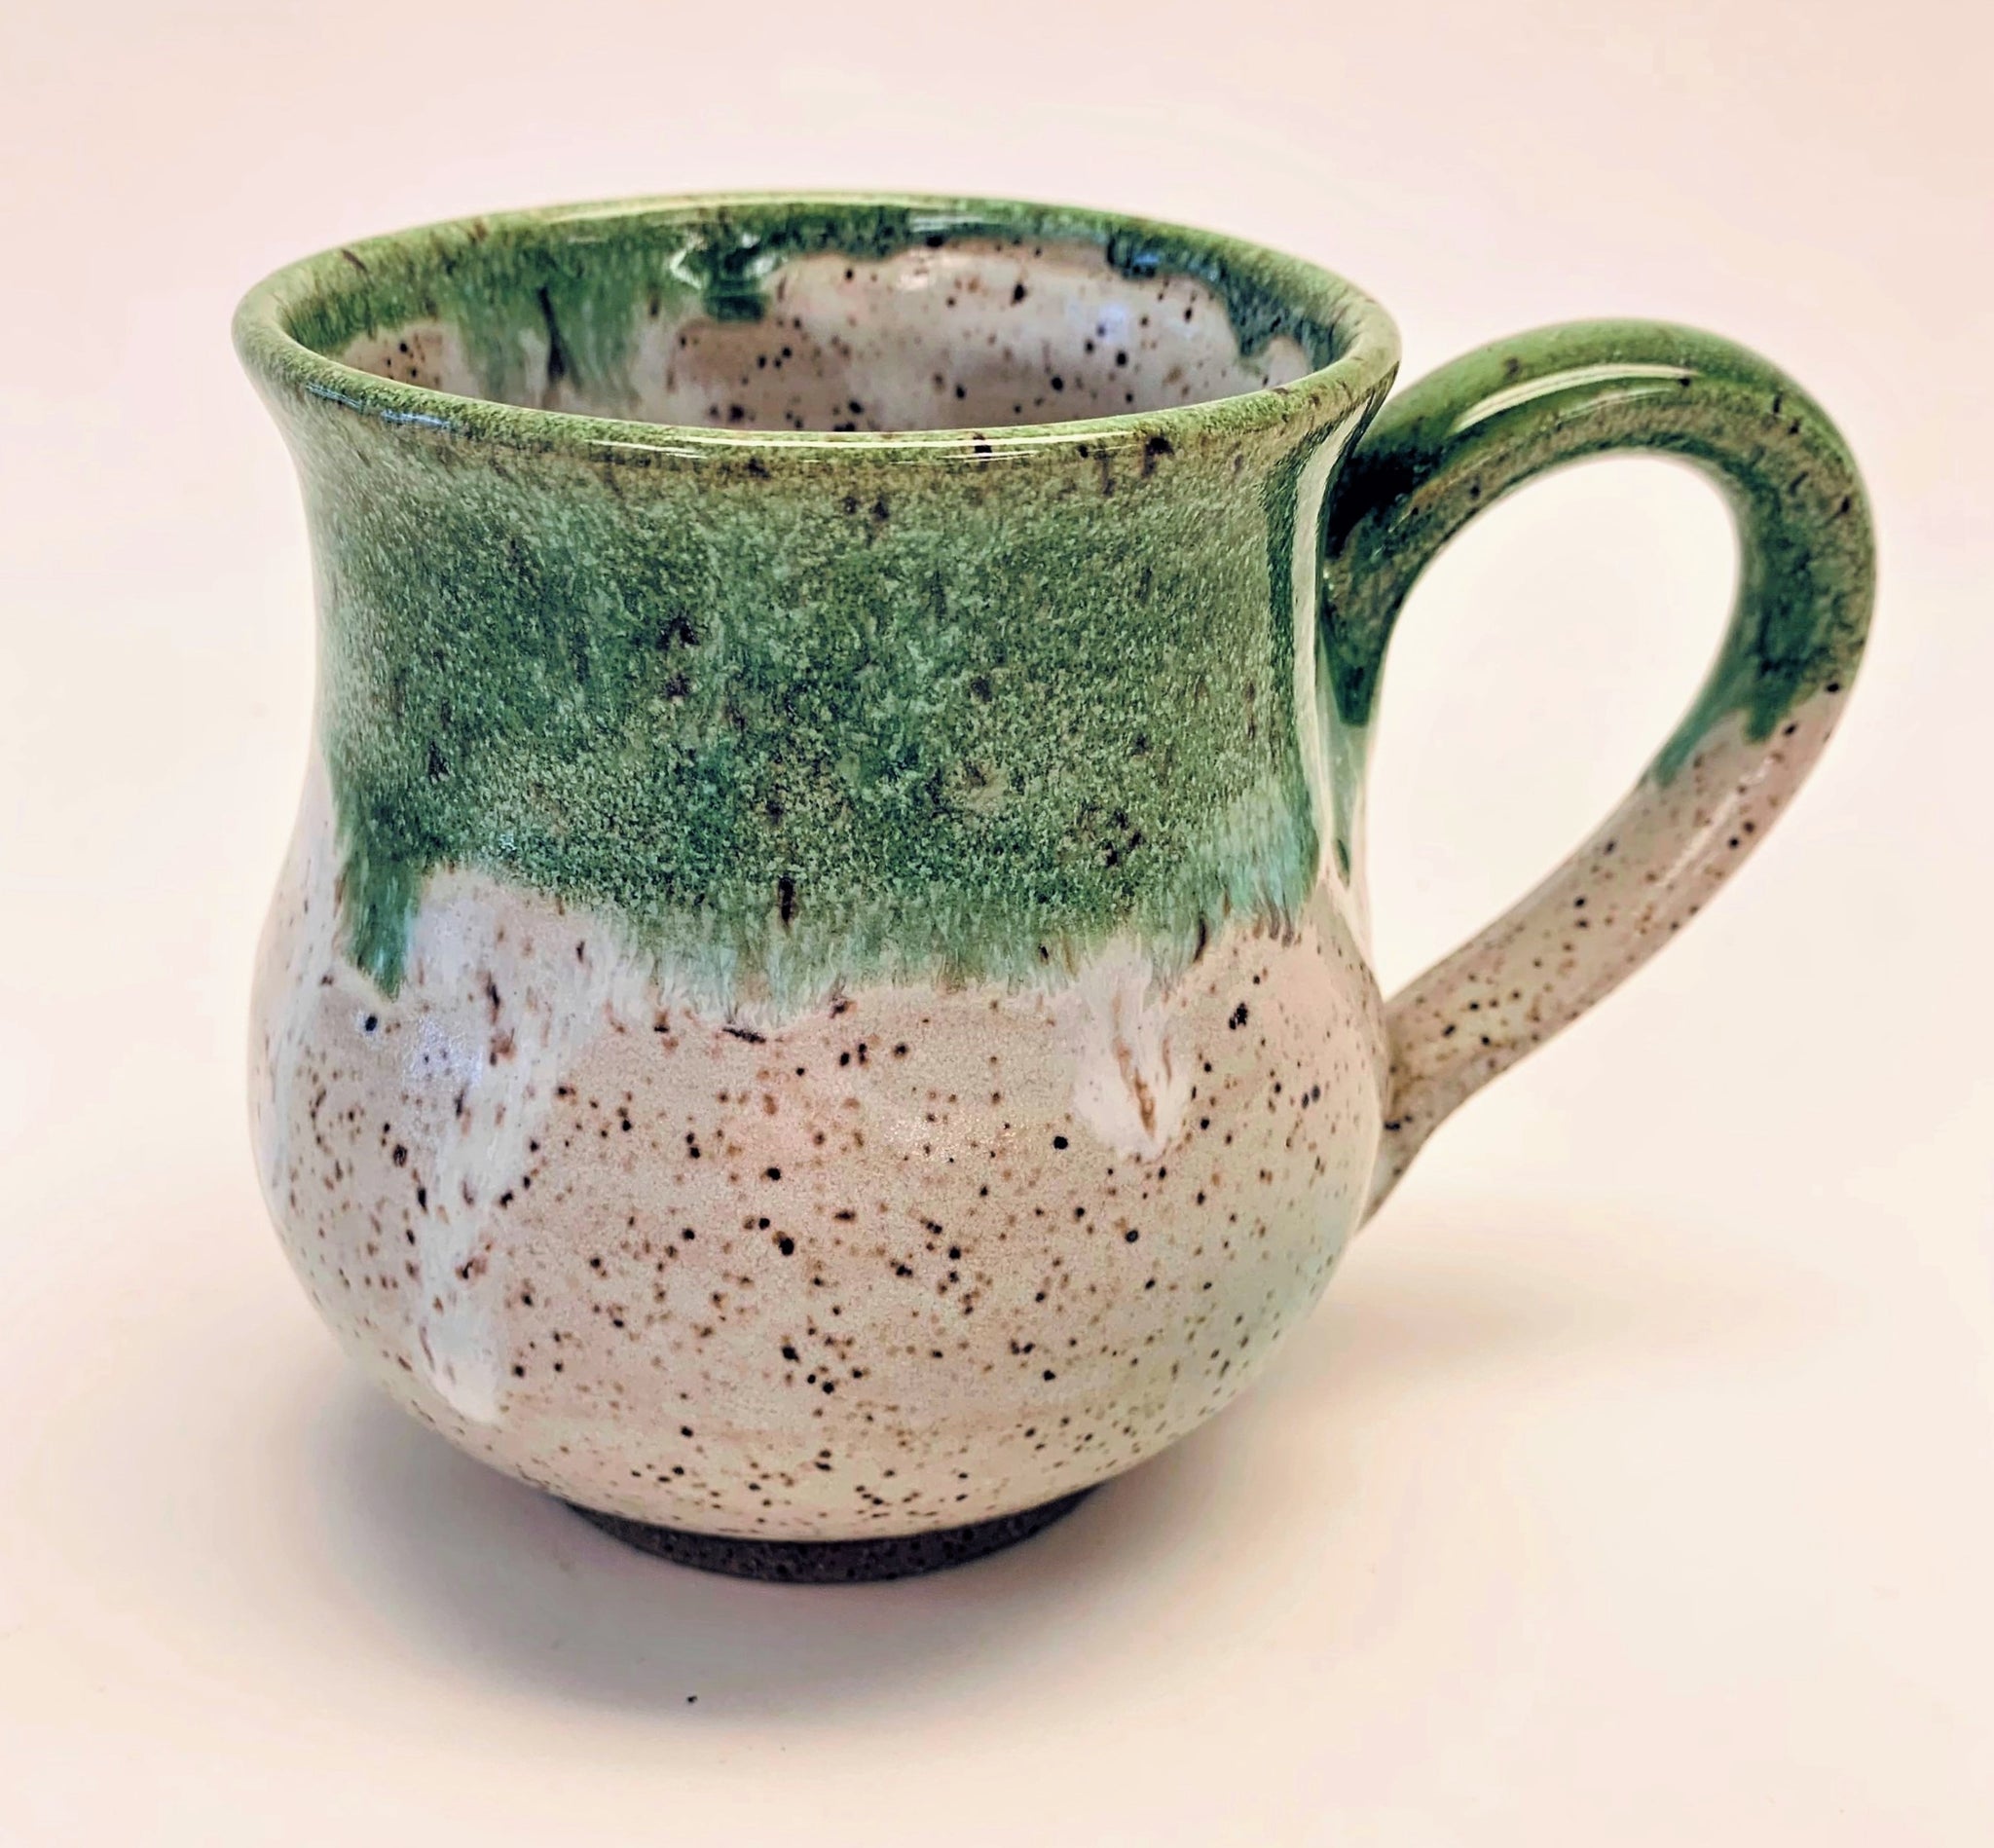 White & Green Stoneware Mug